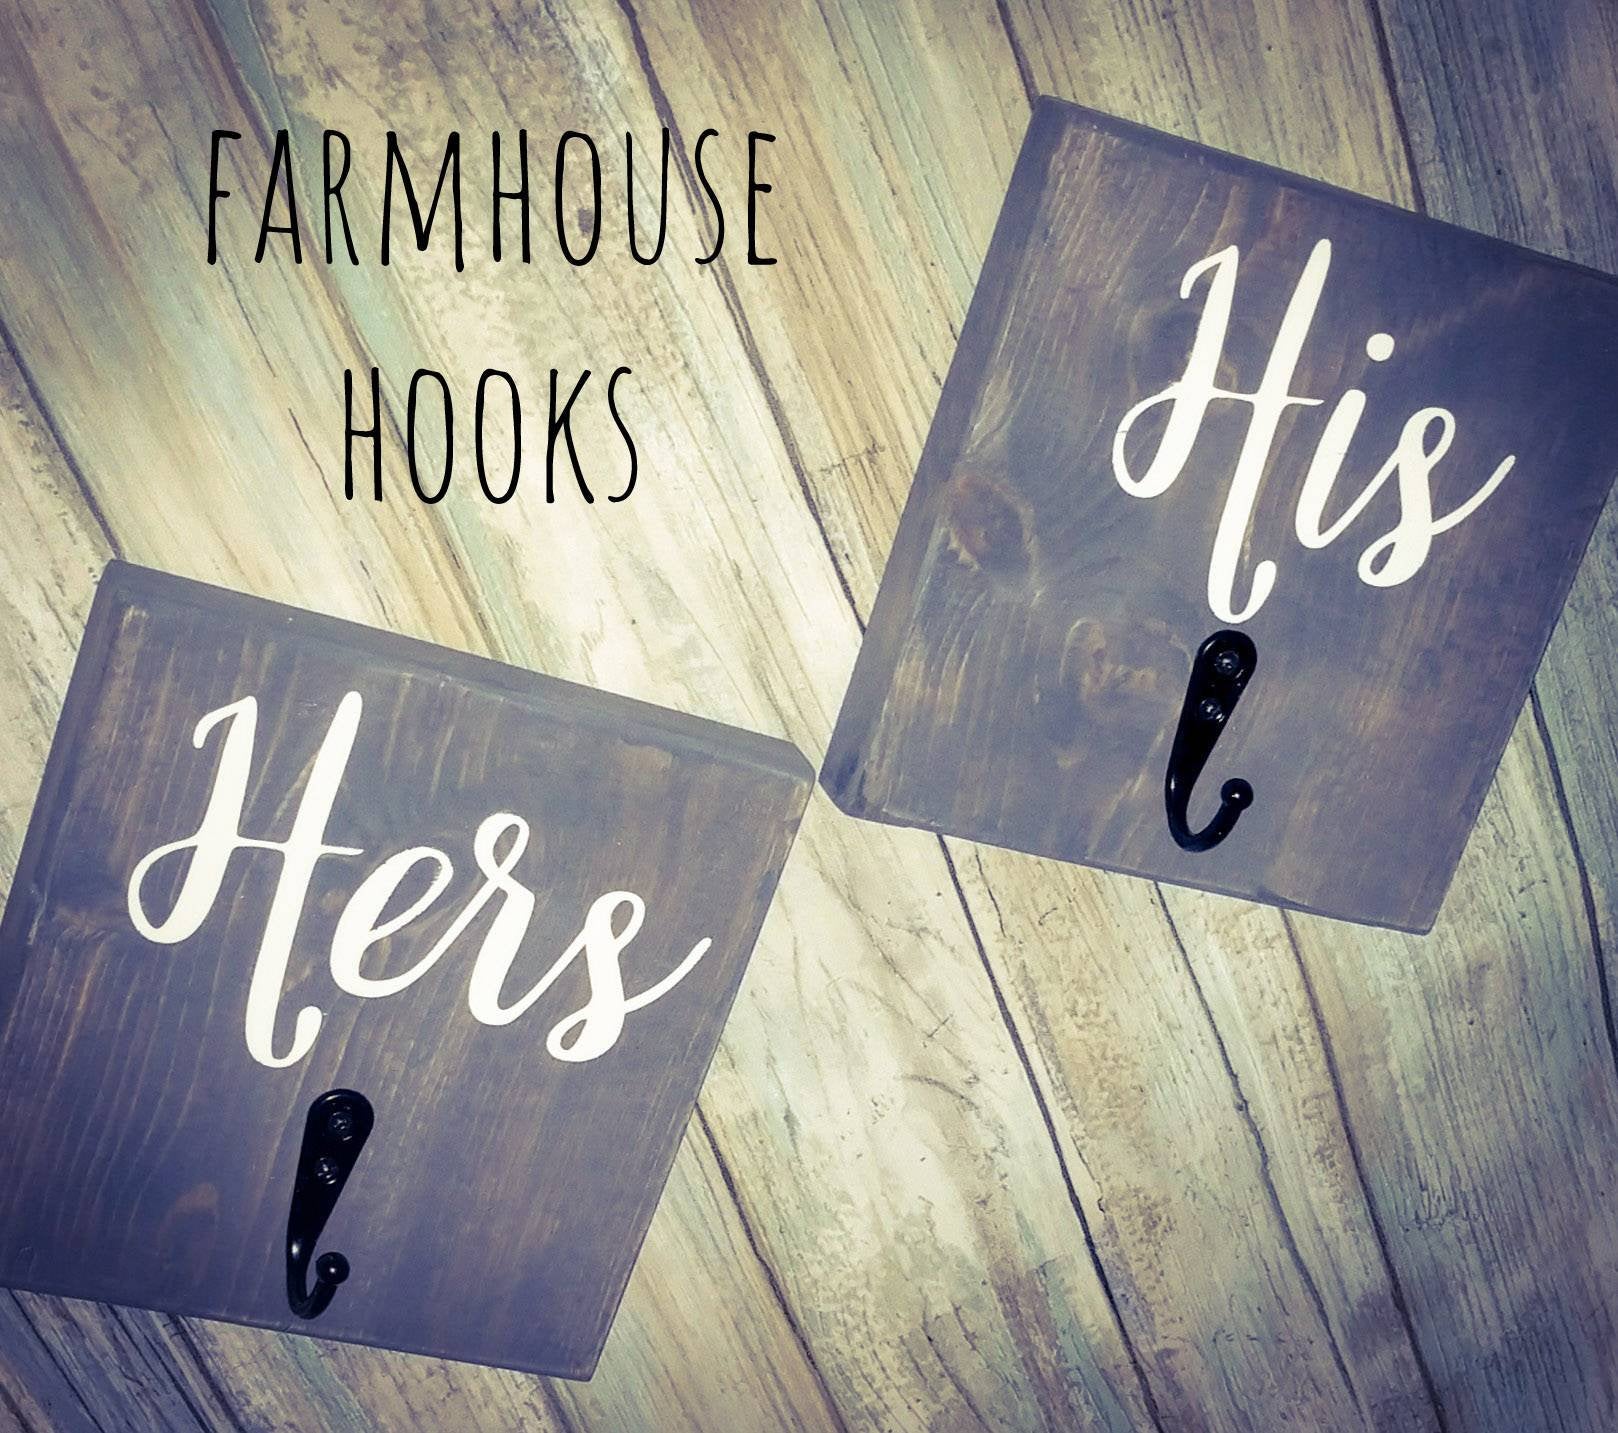 Farmhouse Wall Hook - Mr. Mrs. His Hers Rustic Towel Hook, Towel